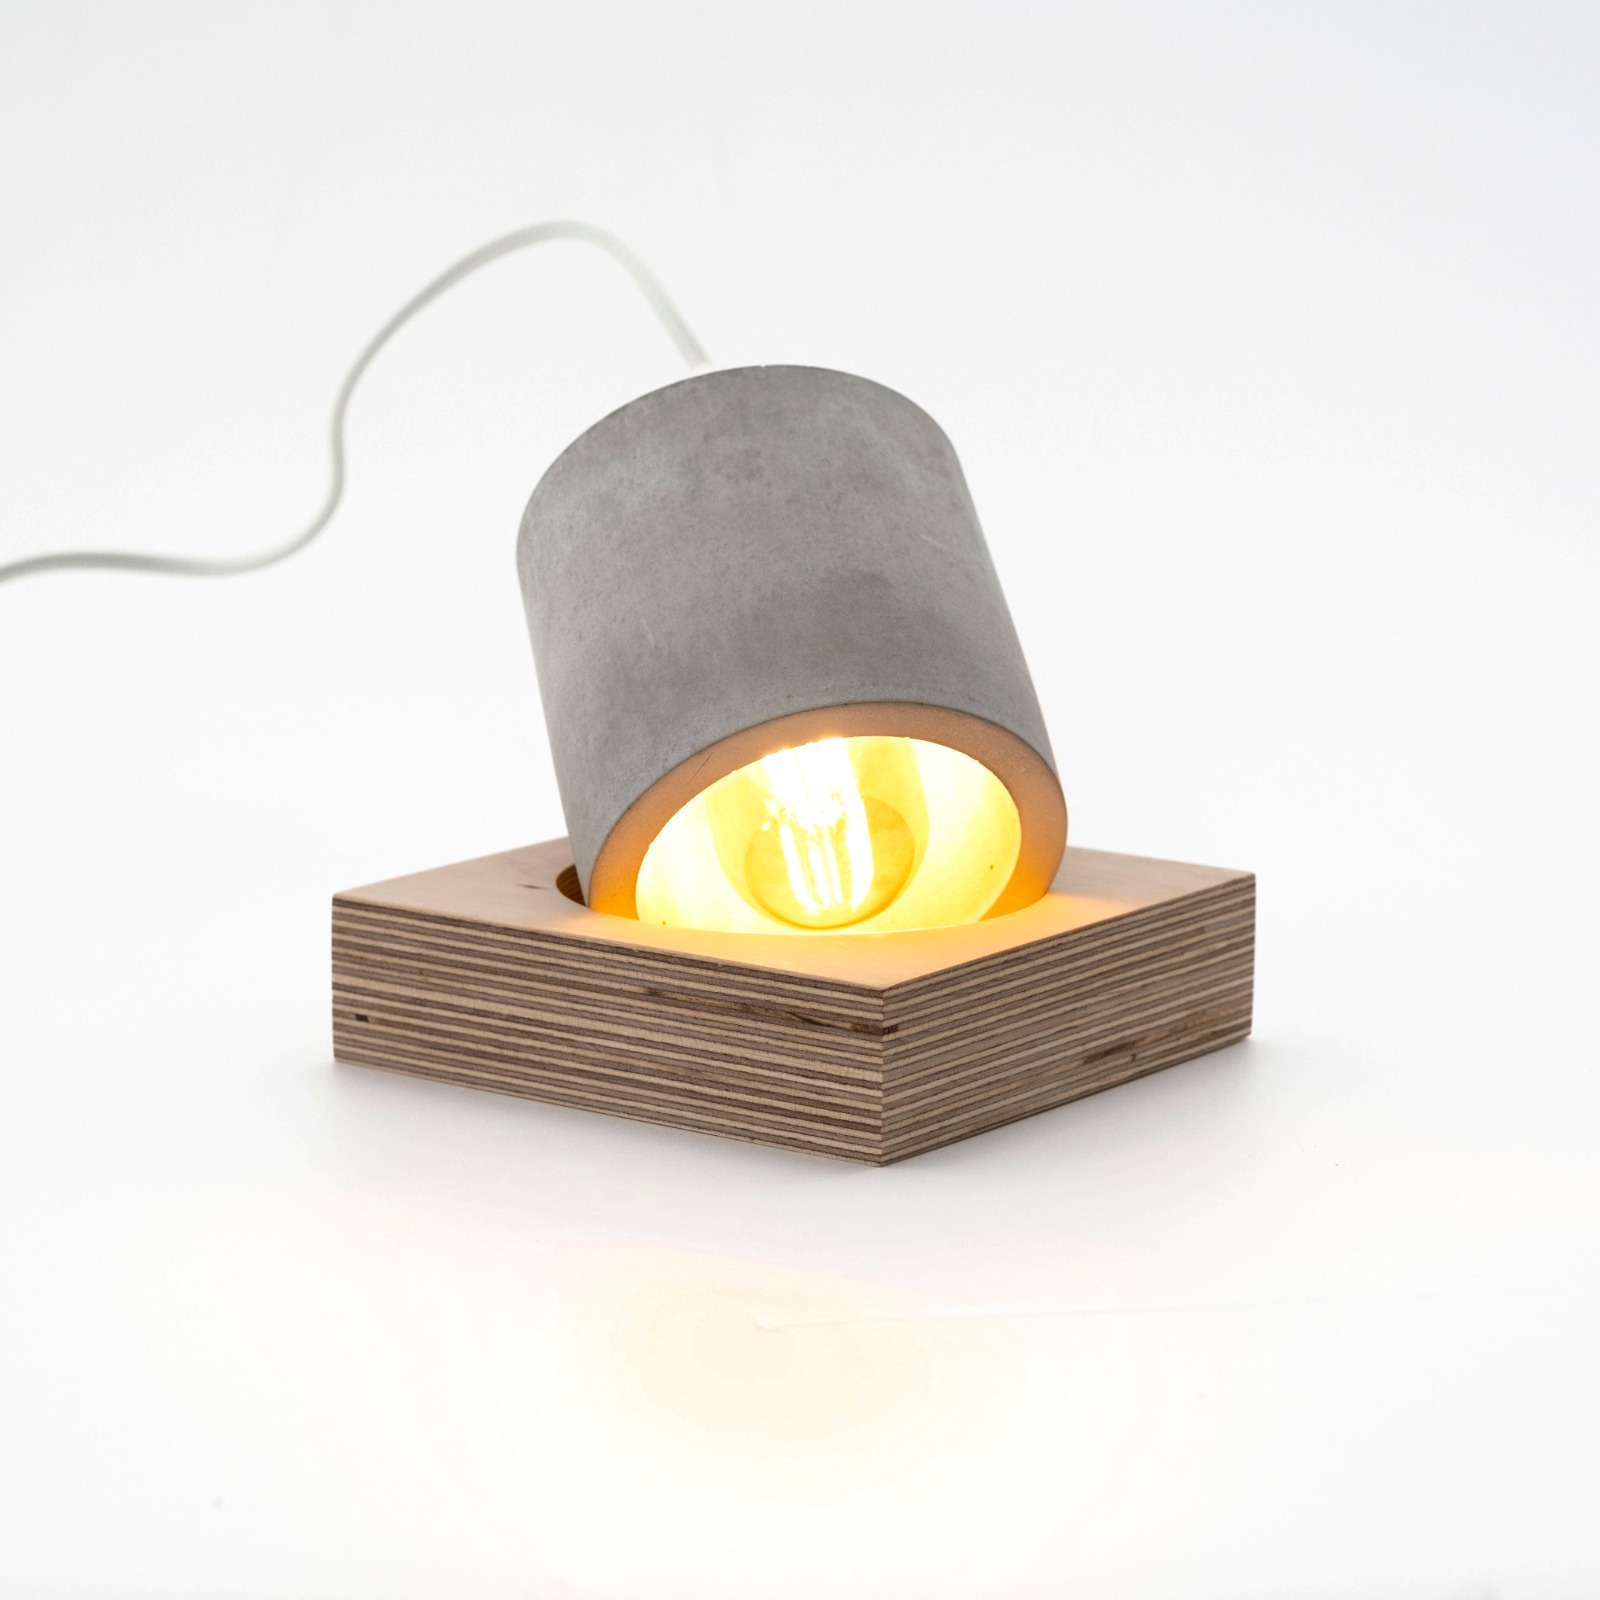 Handmade Wooden Table Lamp